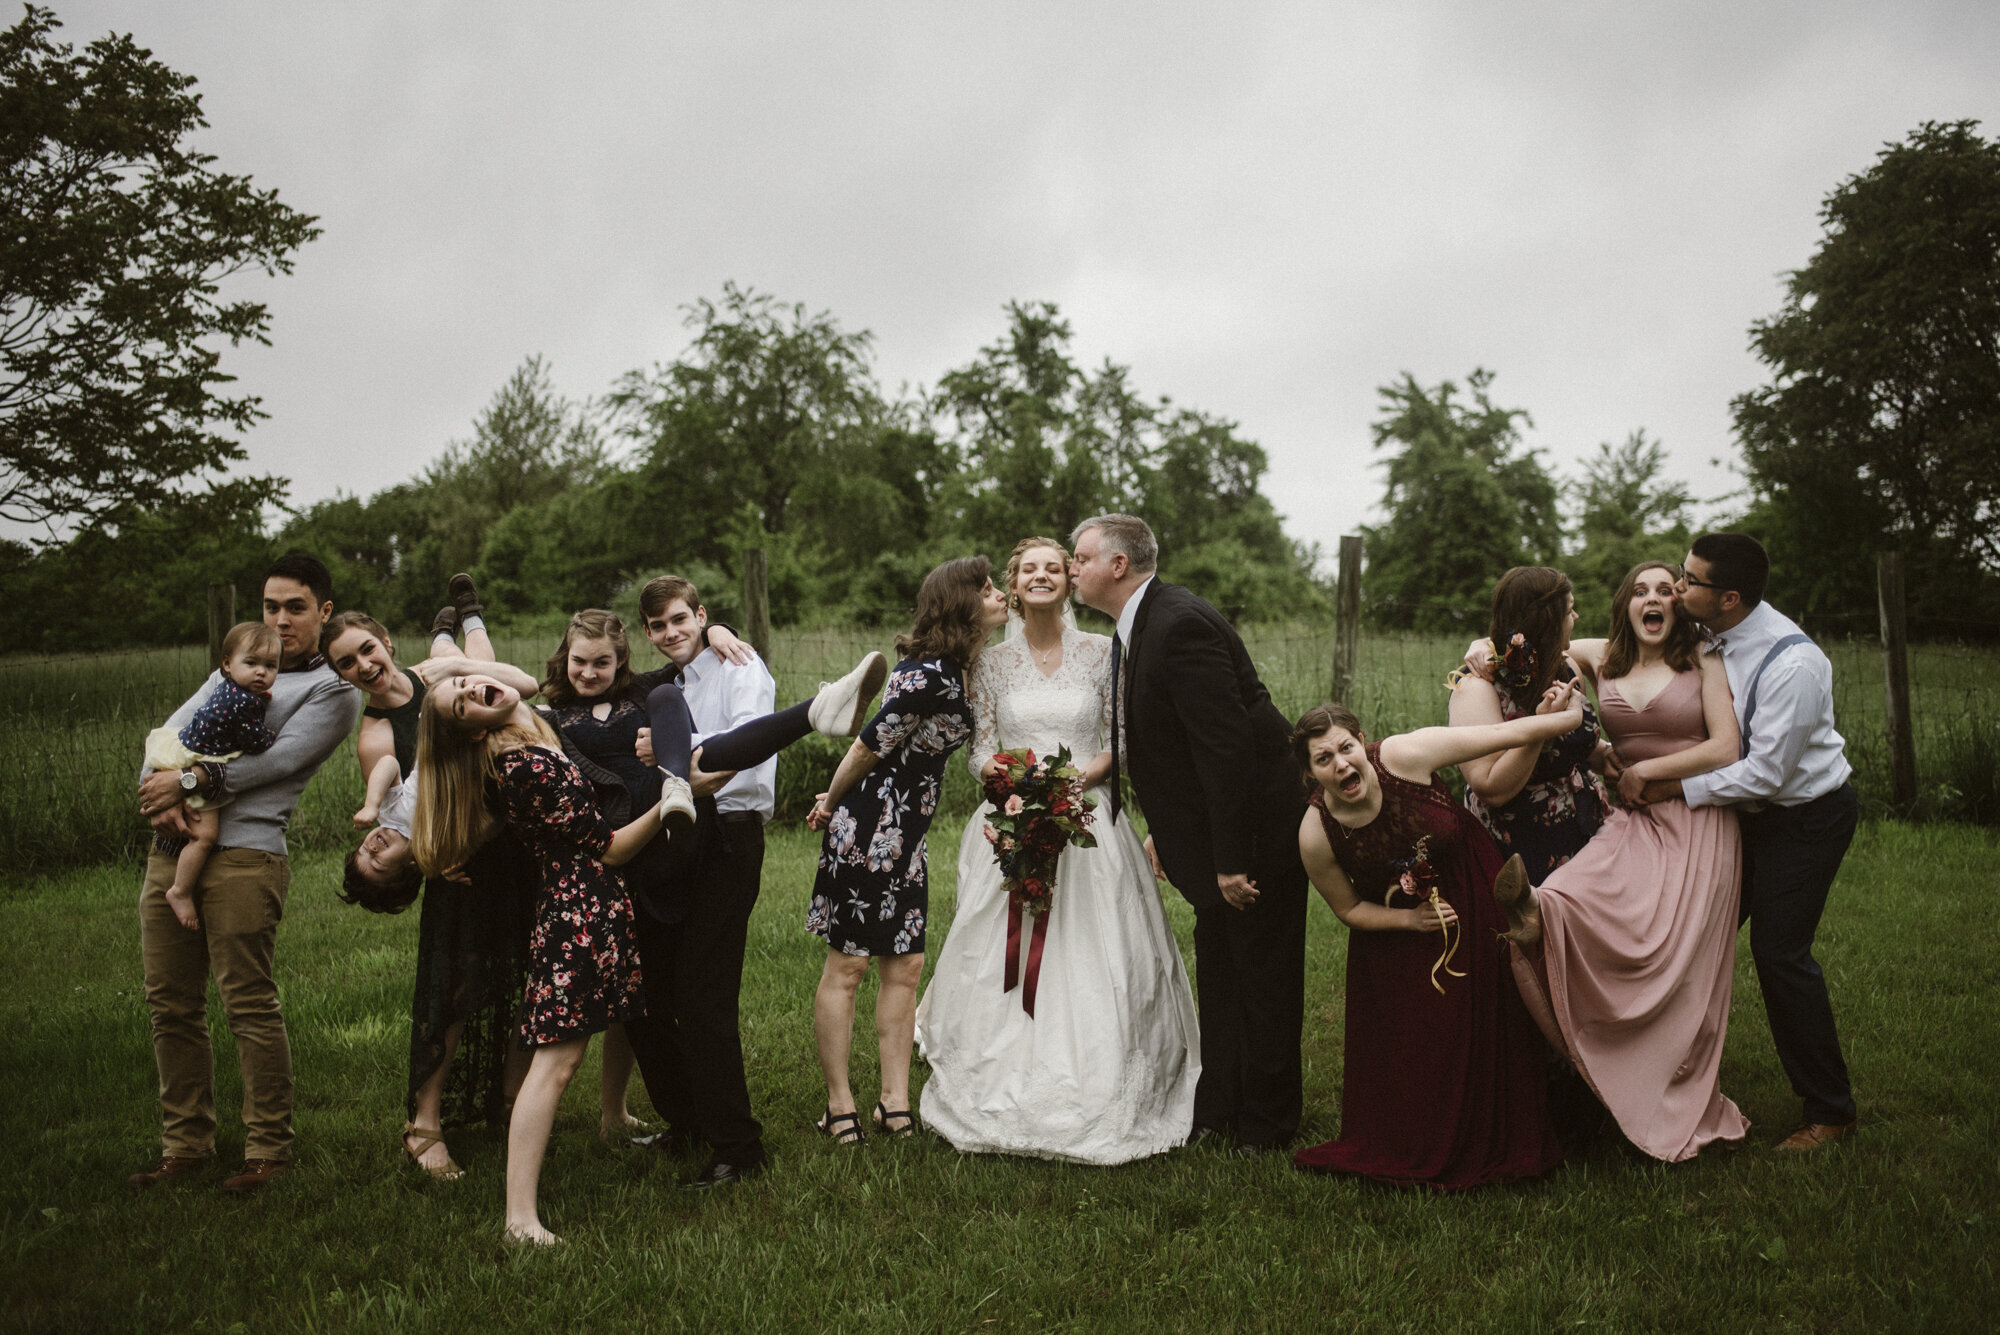 Alli and Mitchell - Rainy Backyard Wedding - Intimate Wedding - Fun Reception Photos - Virginia Wedding Photographer - Documentary Wedding Photography - White Sails Creative - Virginia Backyard Wedding Photographer_47.jpg